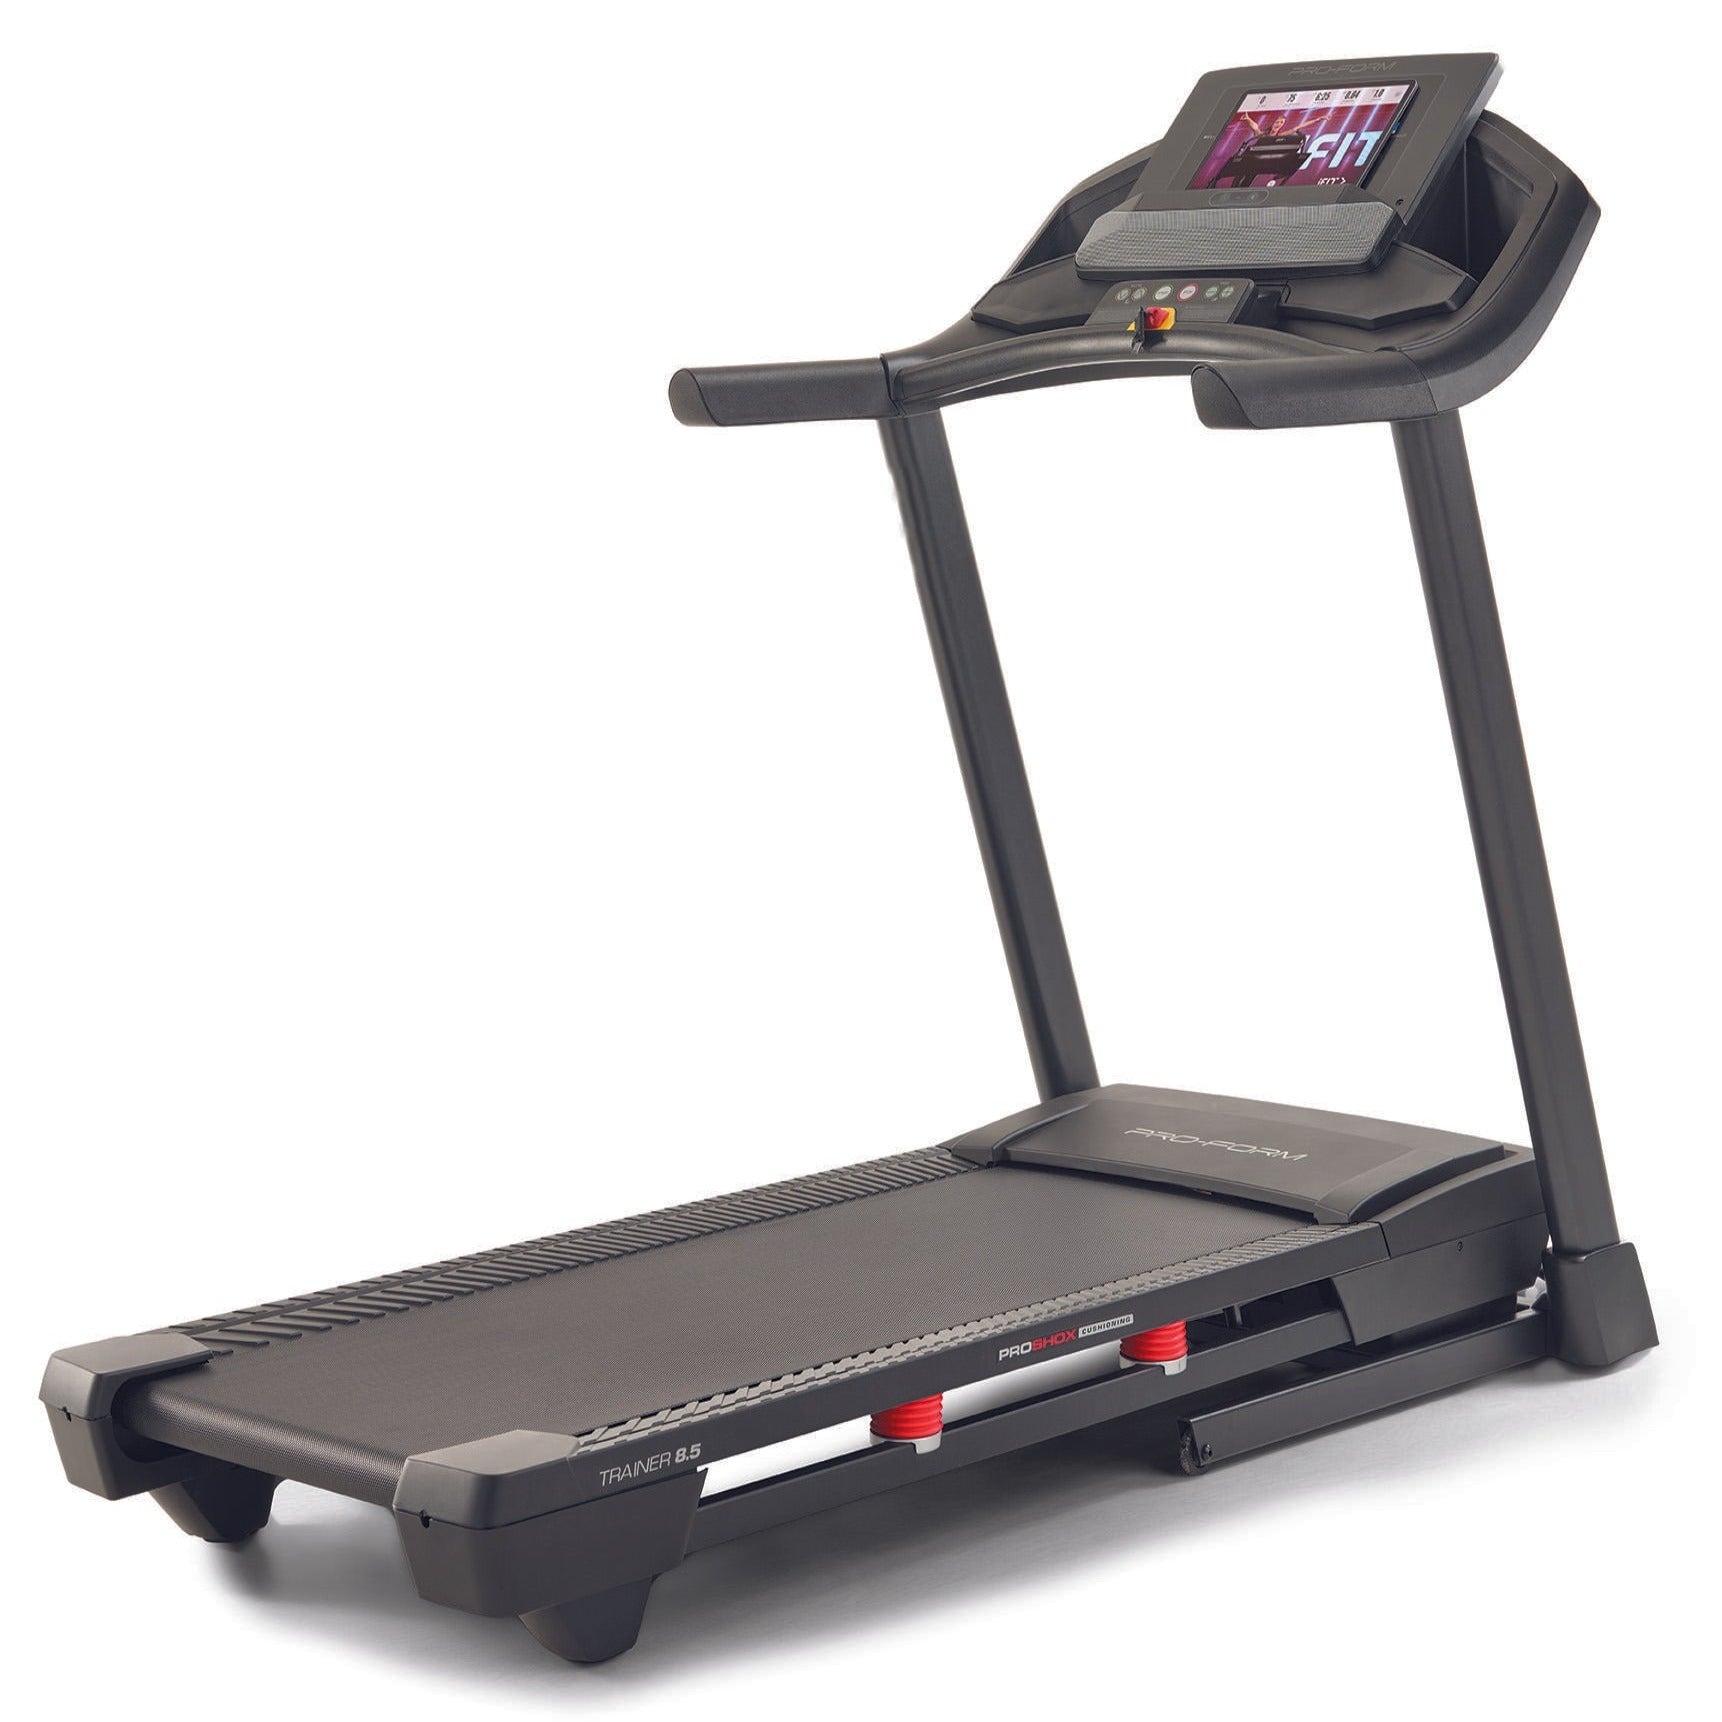  Proform Treadmill Trainer 8.5